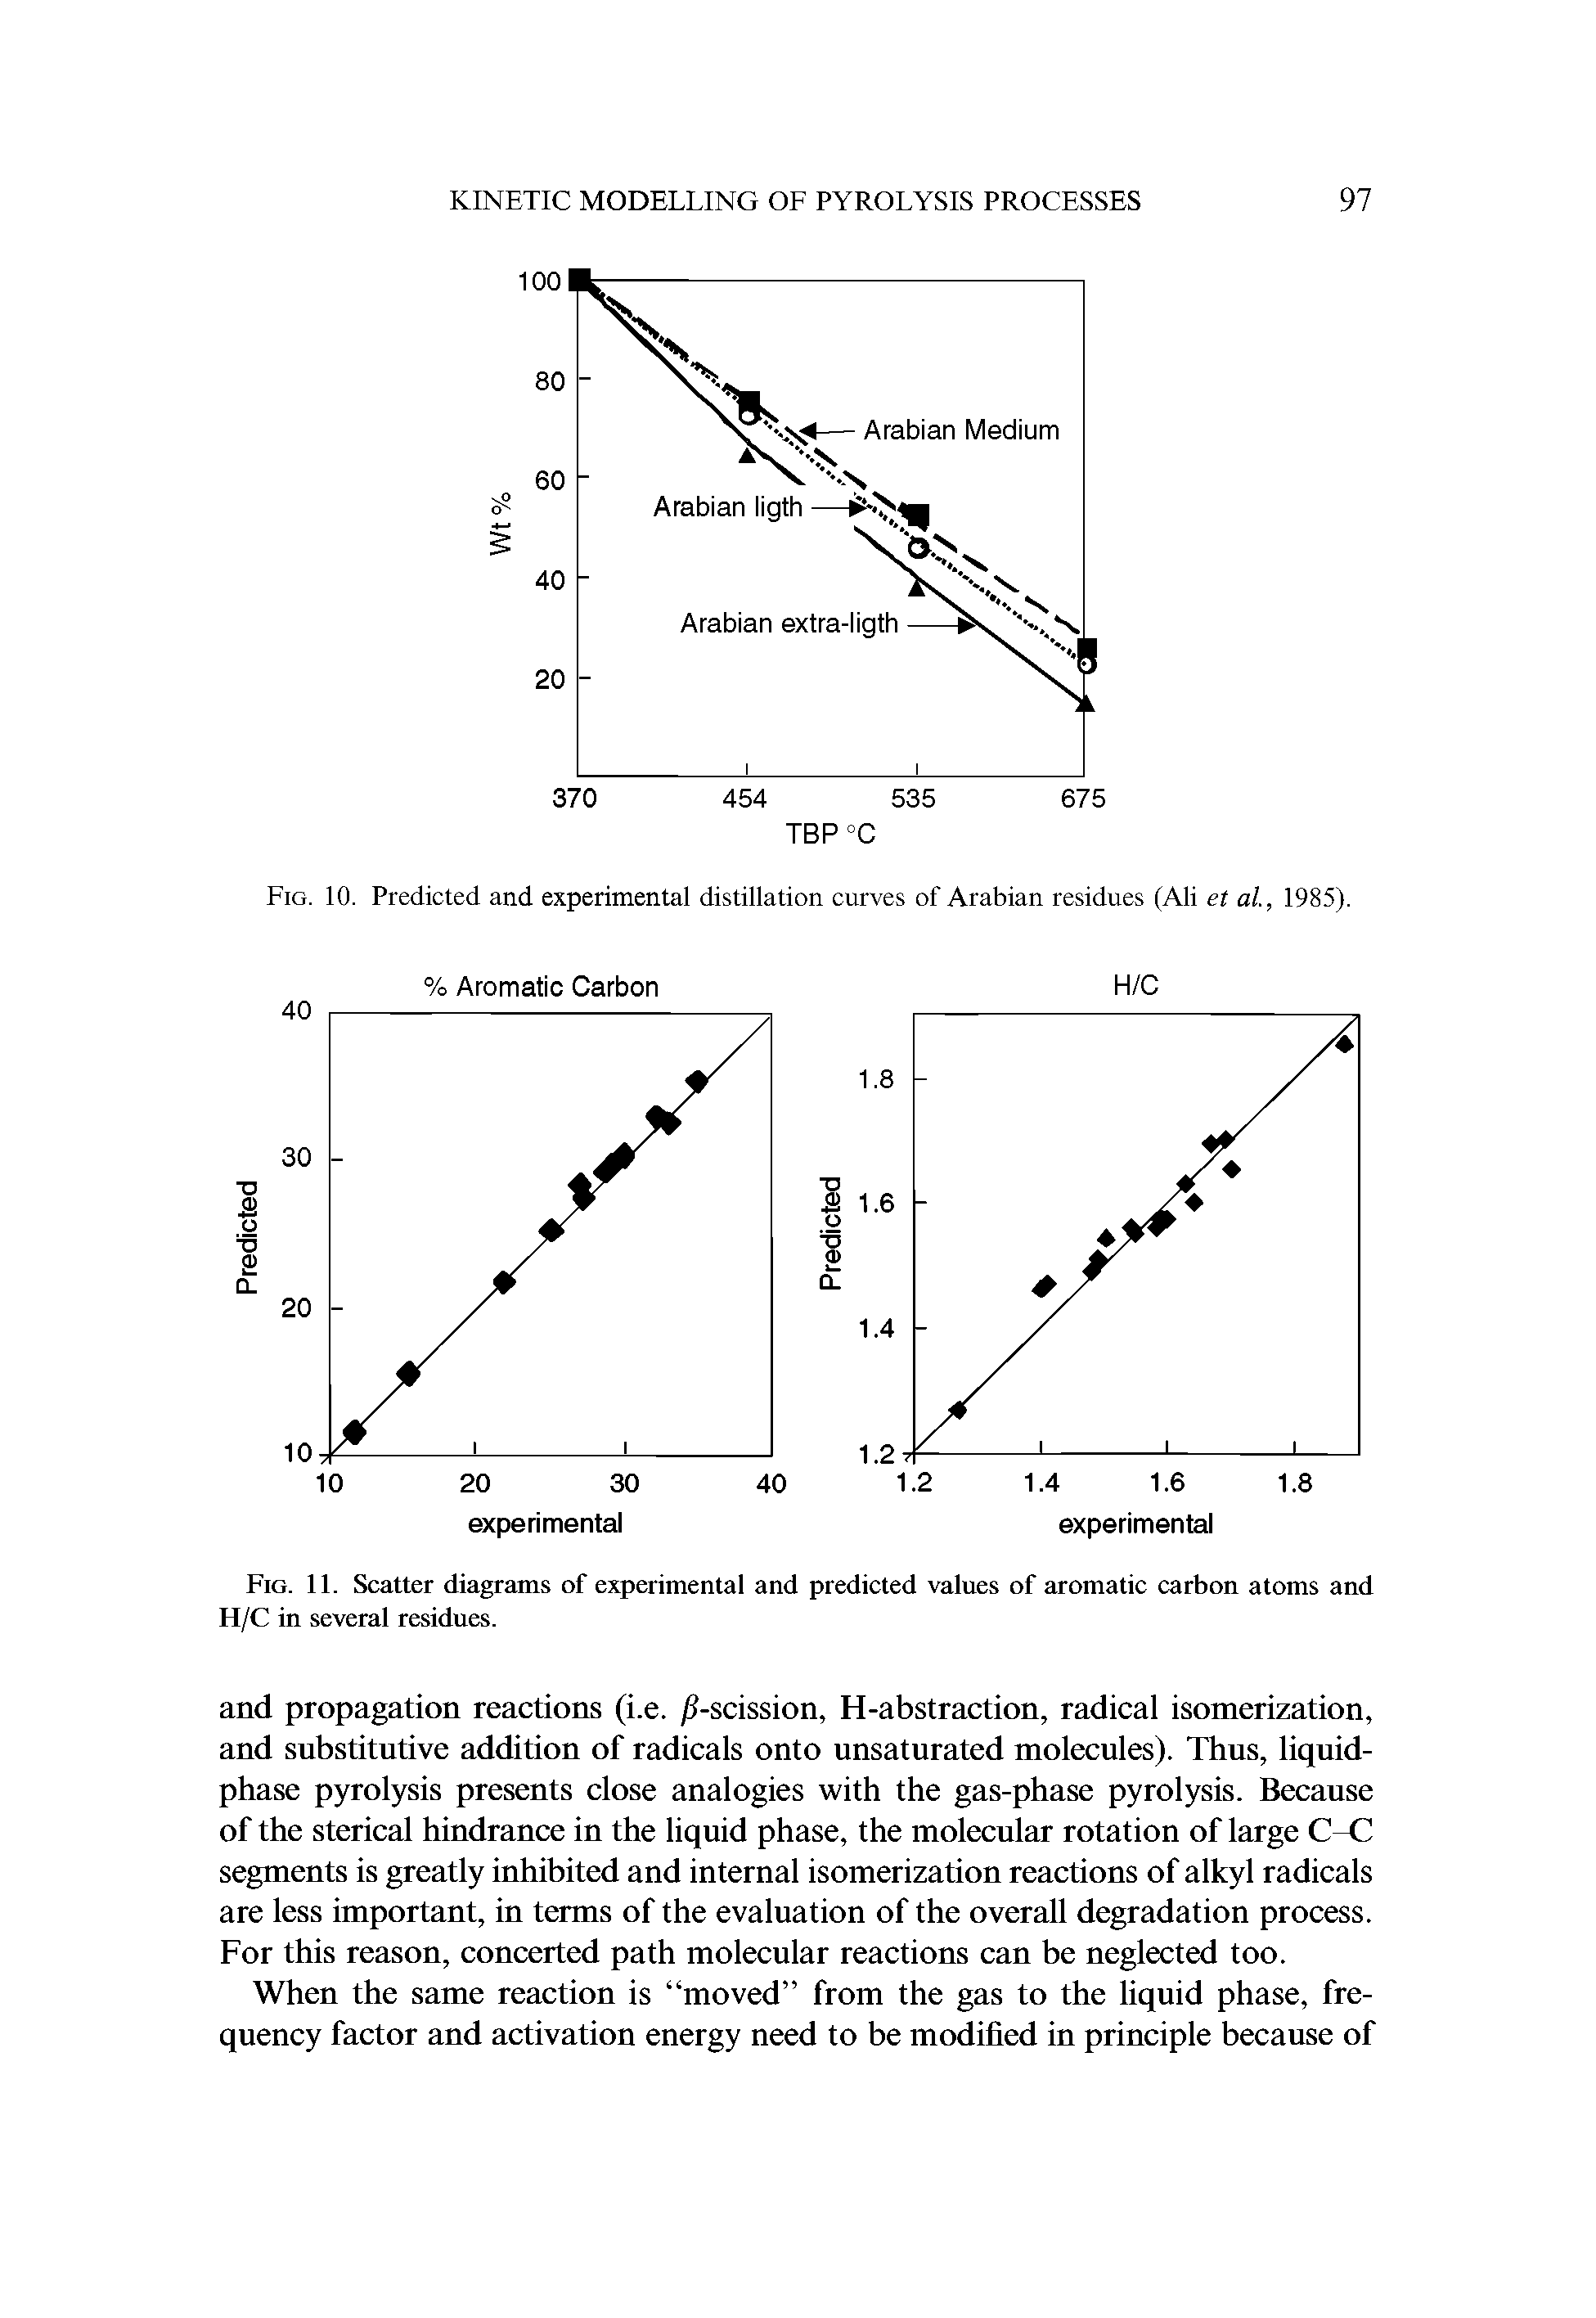 Fig. 10. Predicted and experimental distillation curves of Arabian residues (Ali et al., 1985).